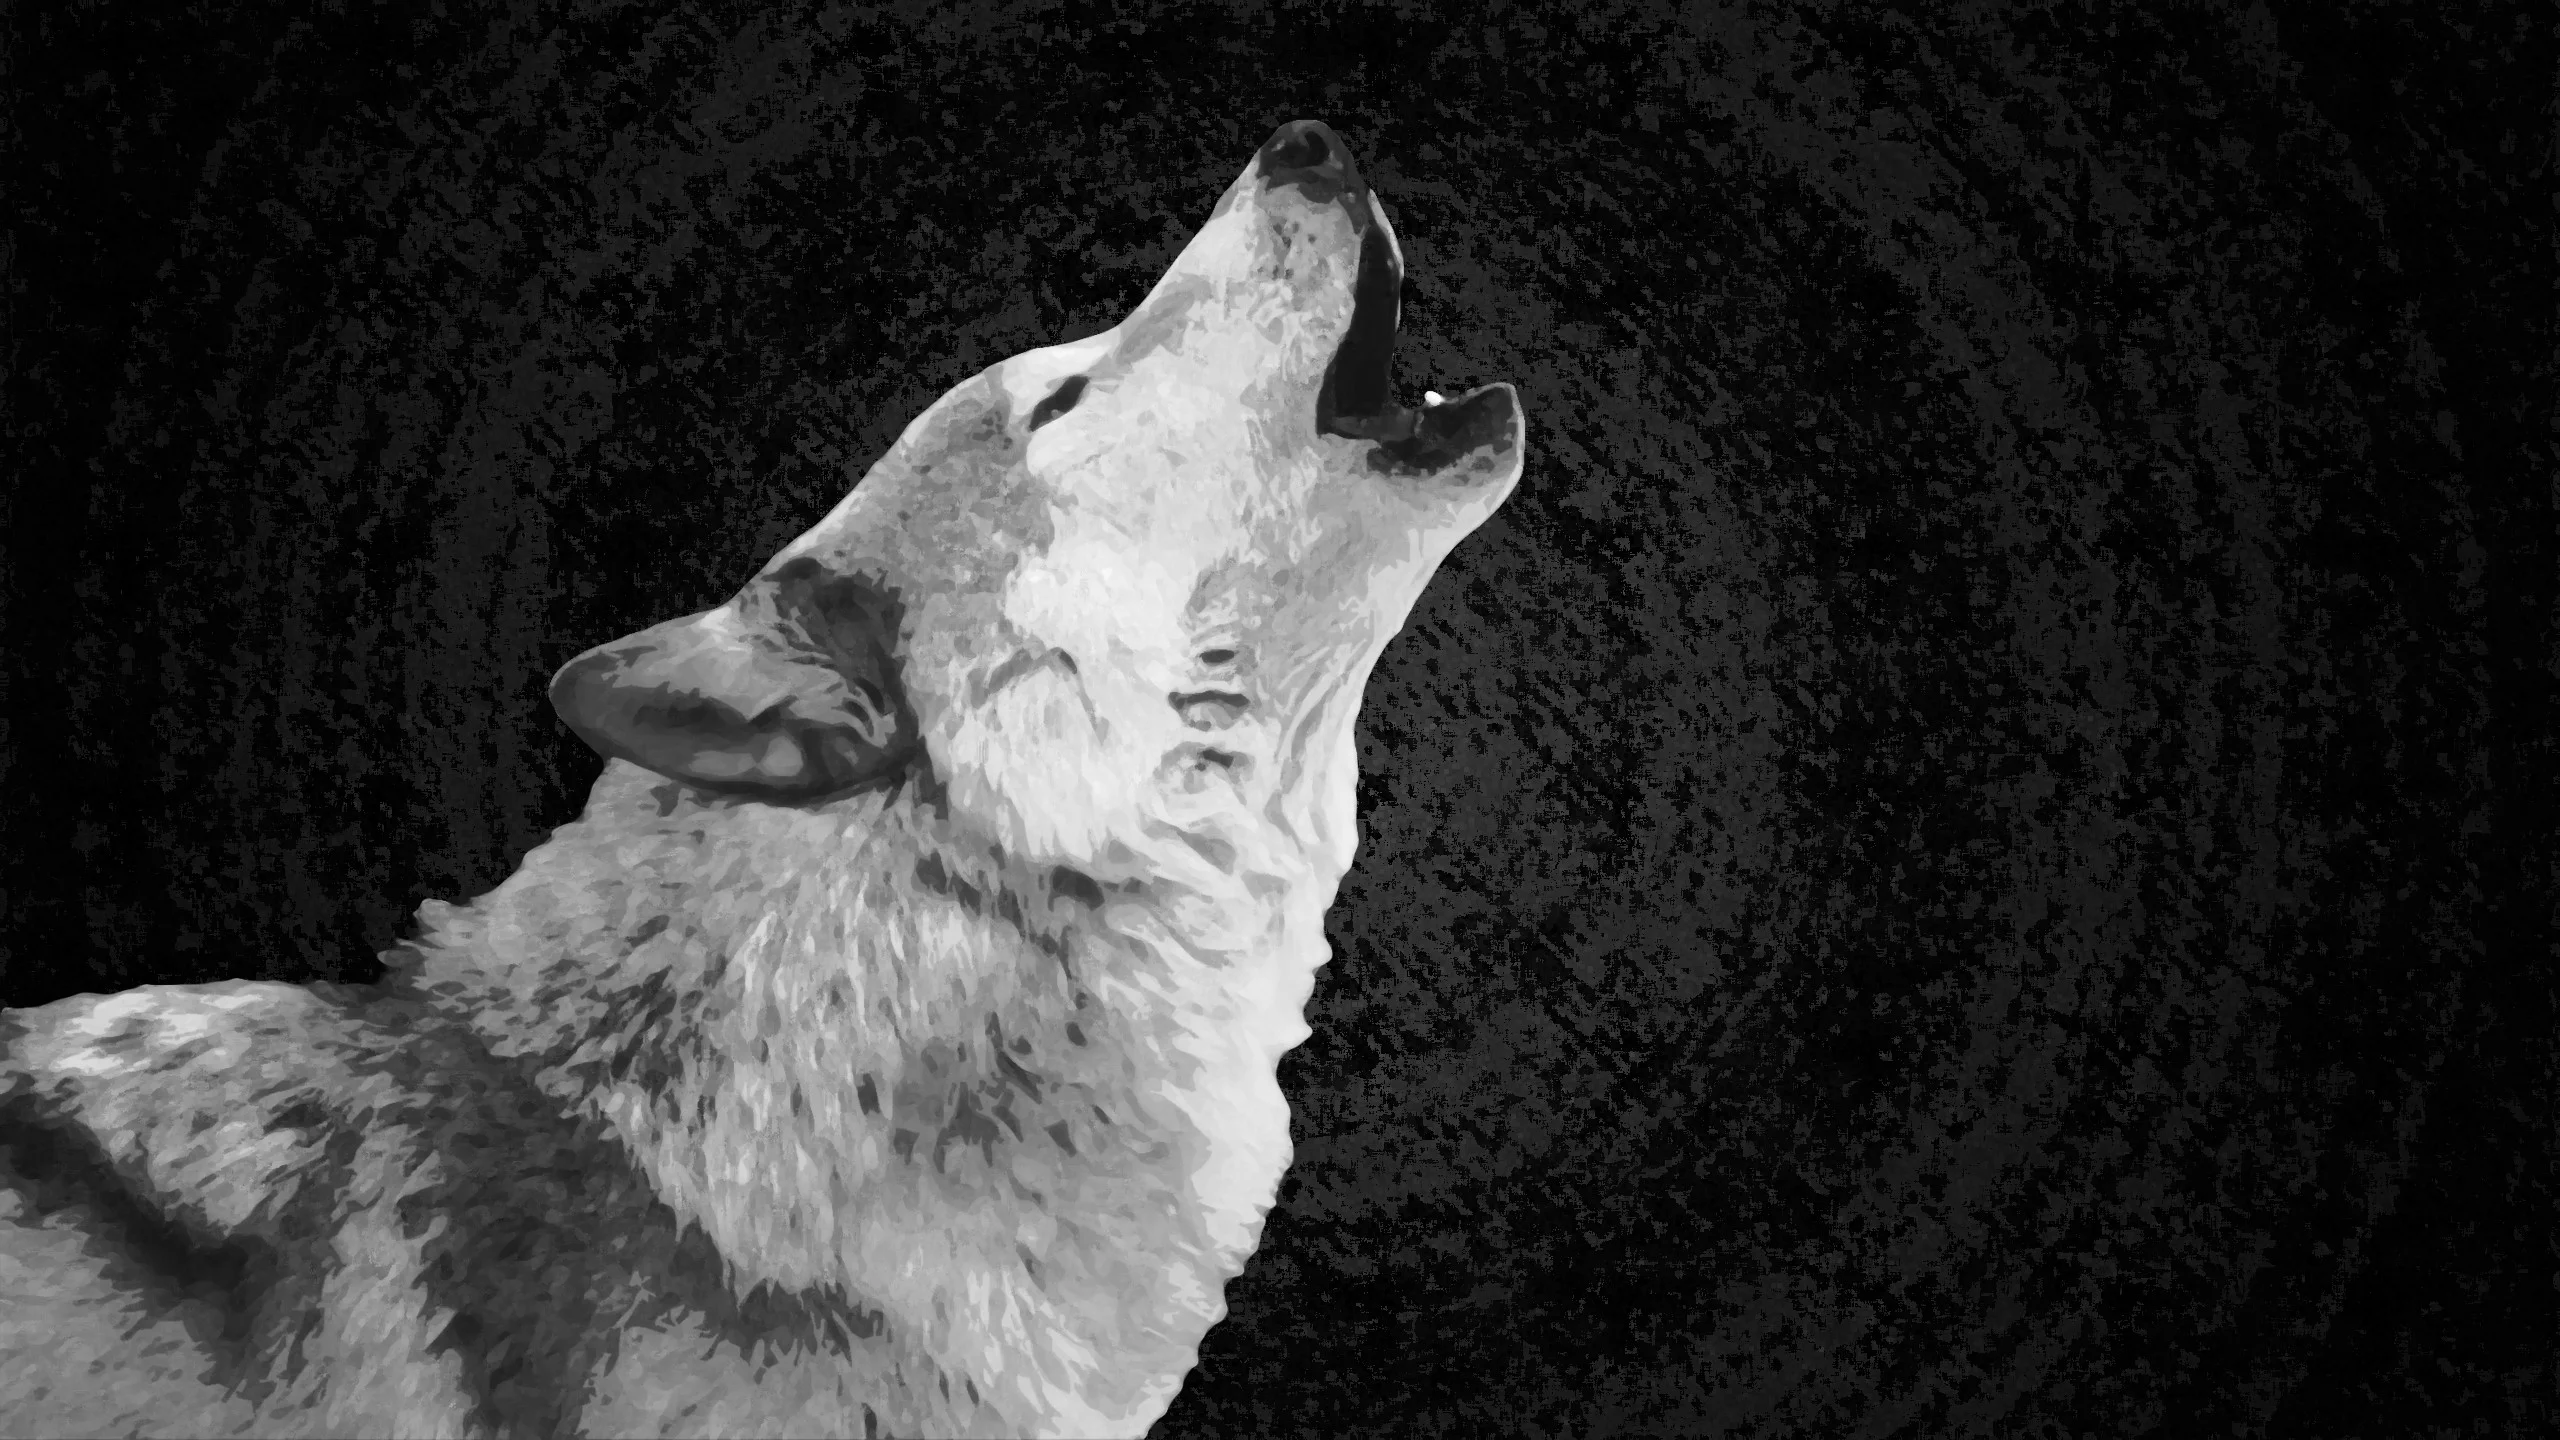 White Wolf wallpaper high definition